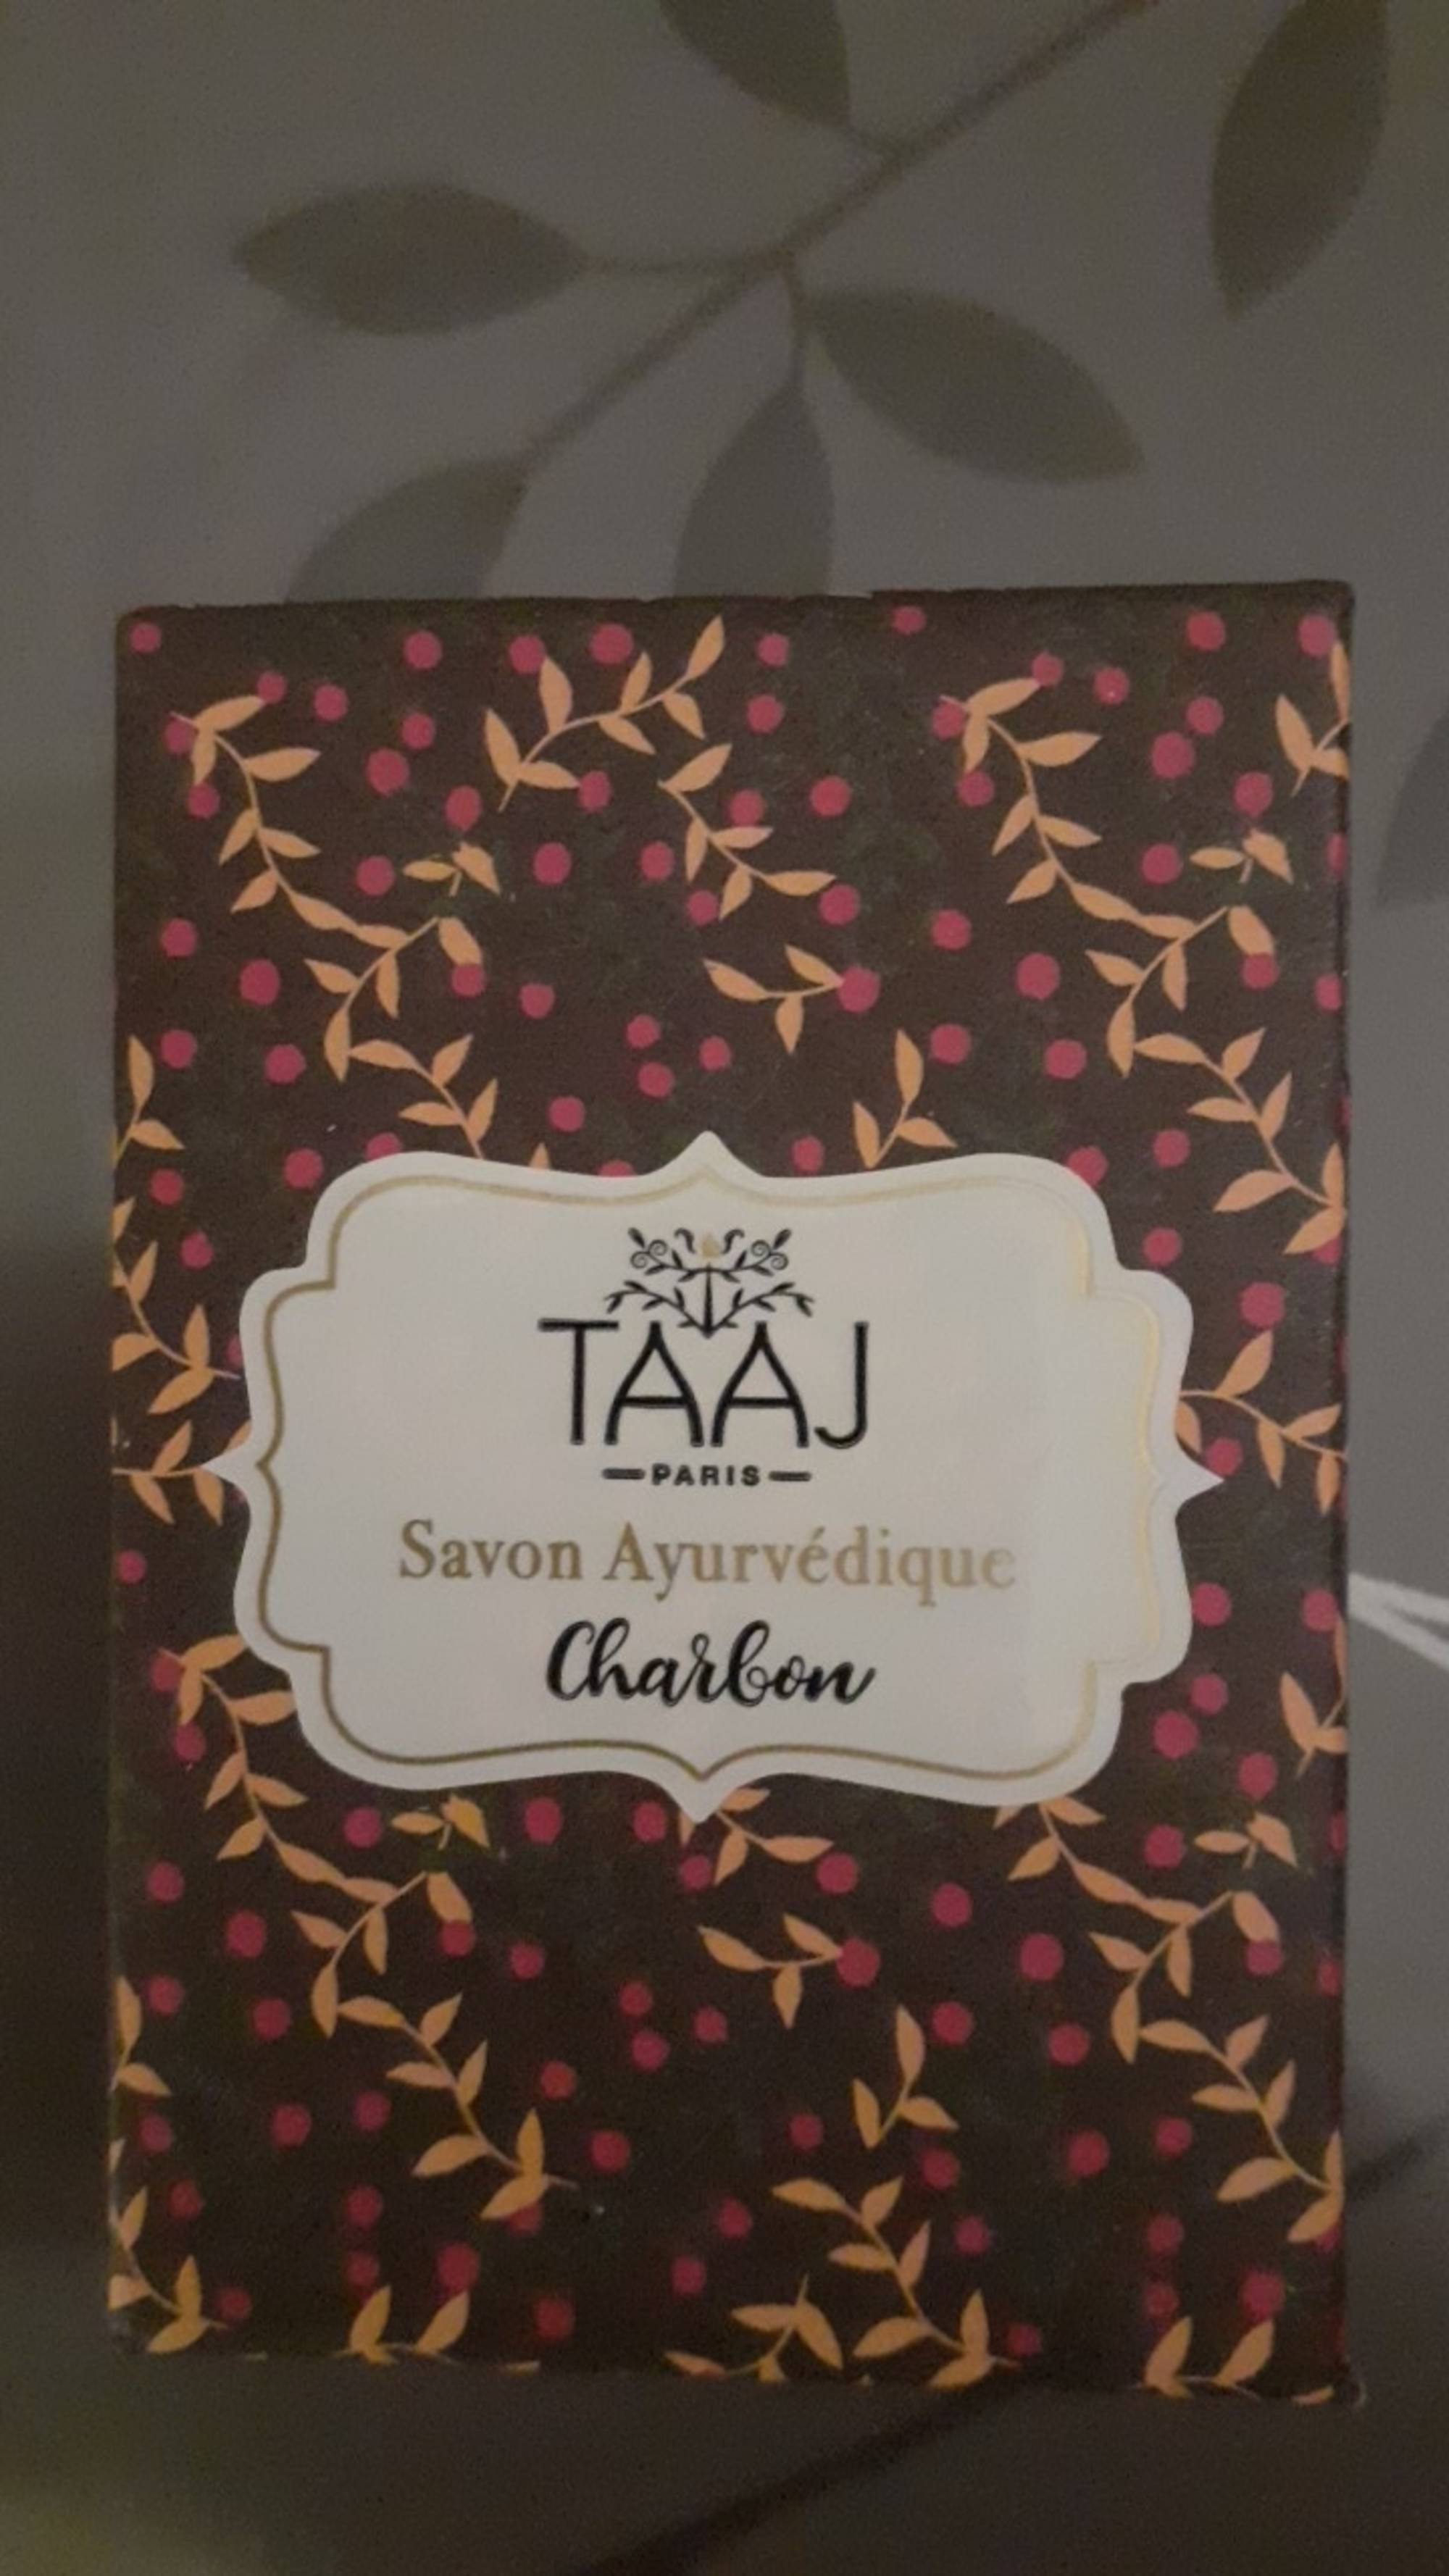 TAAJ - Savon Ayurvédique au Charbon